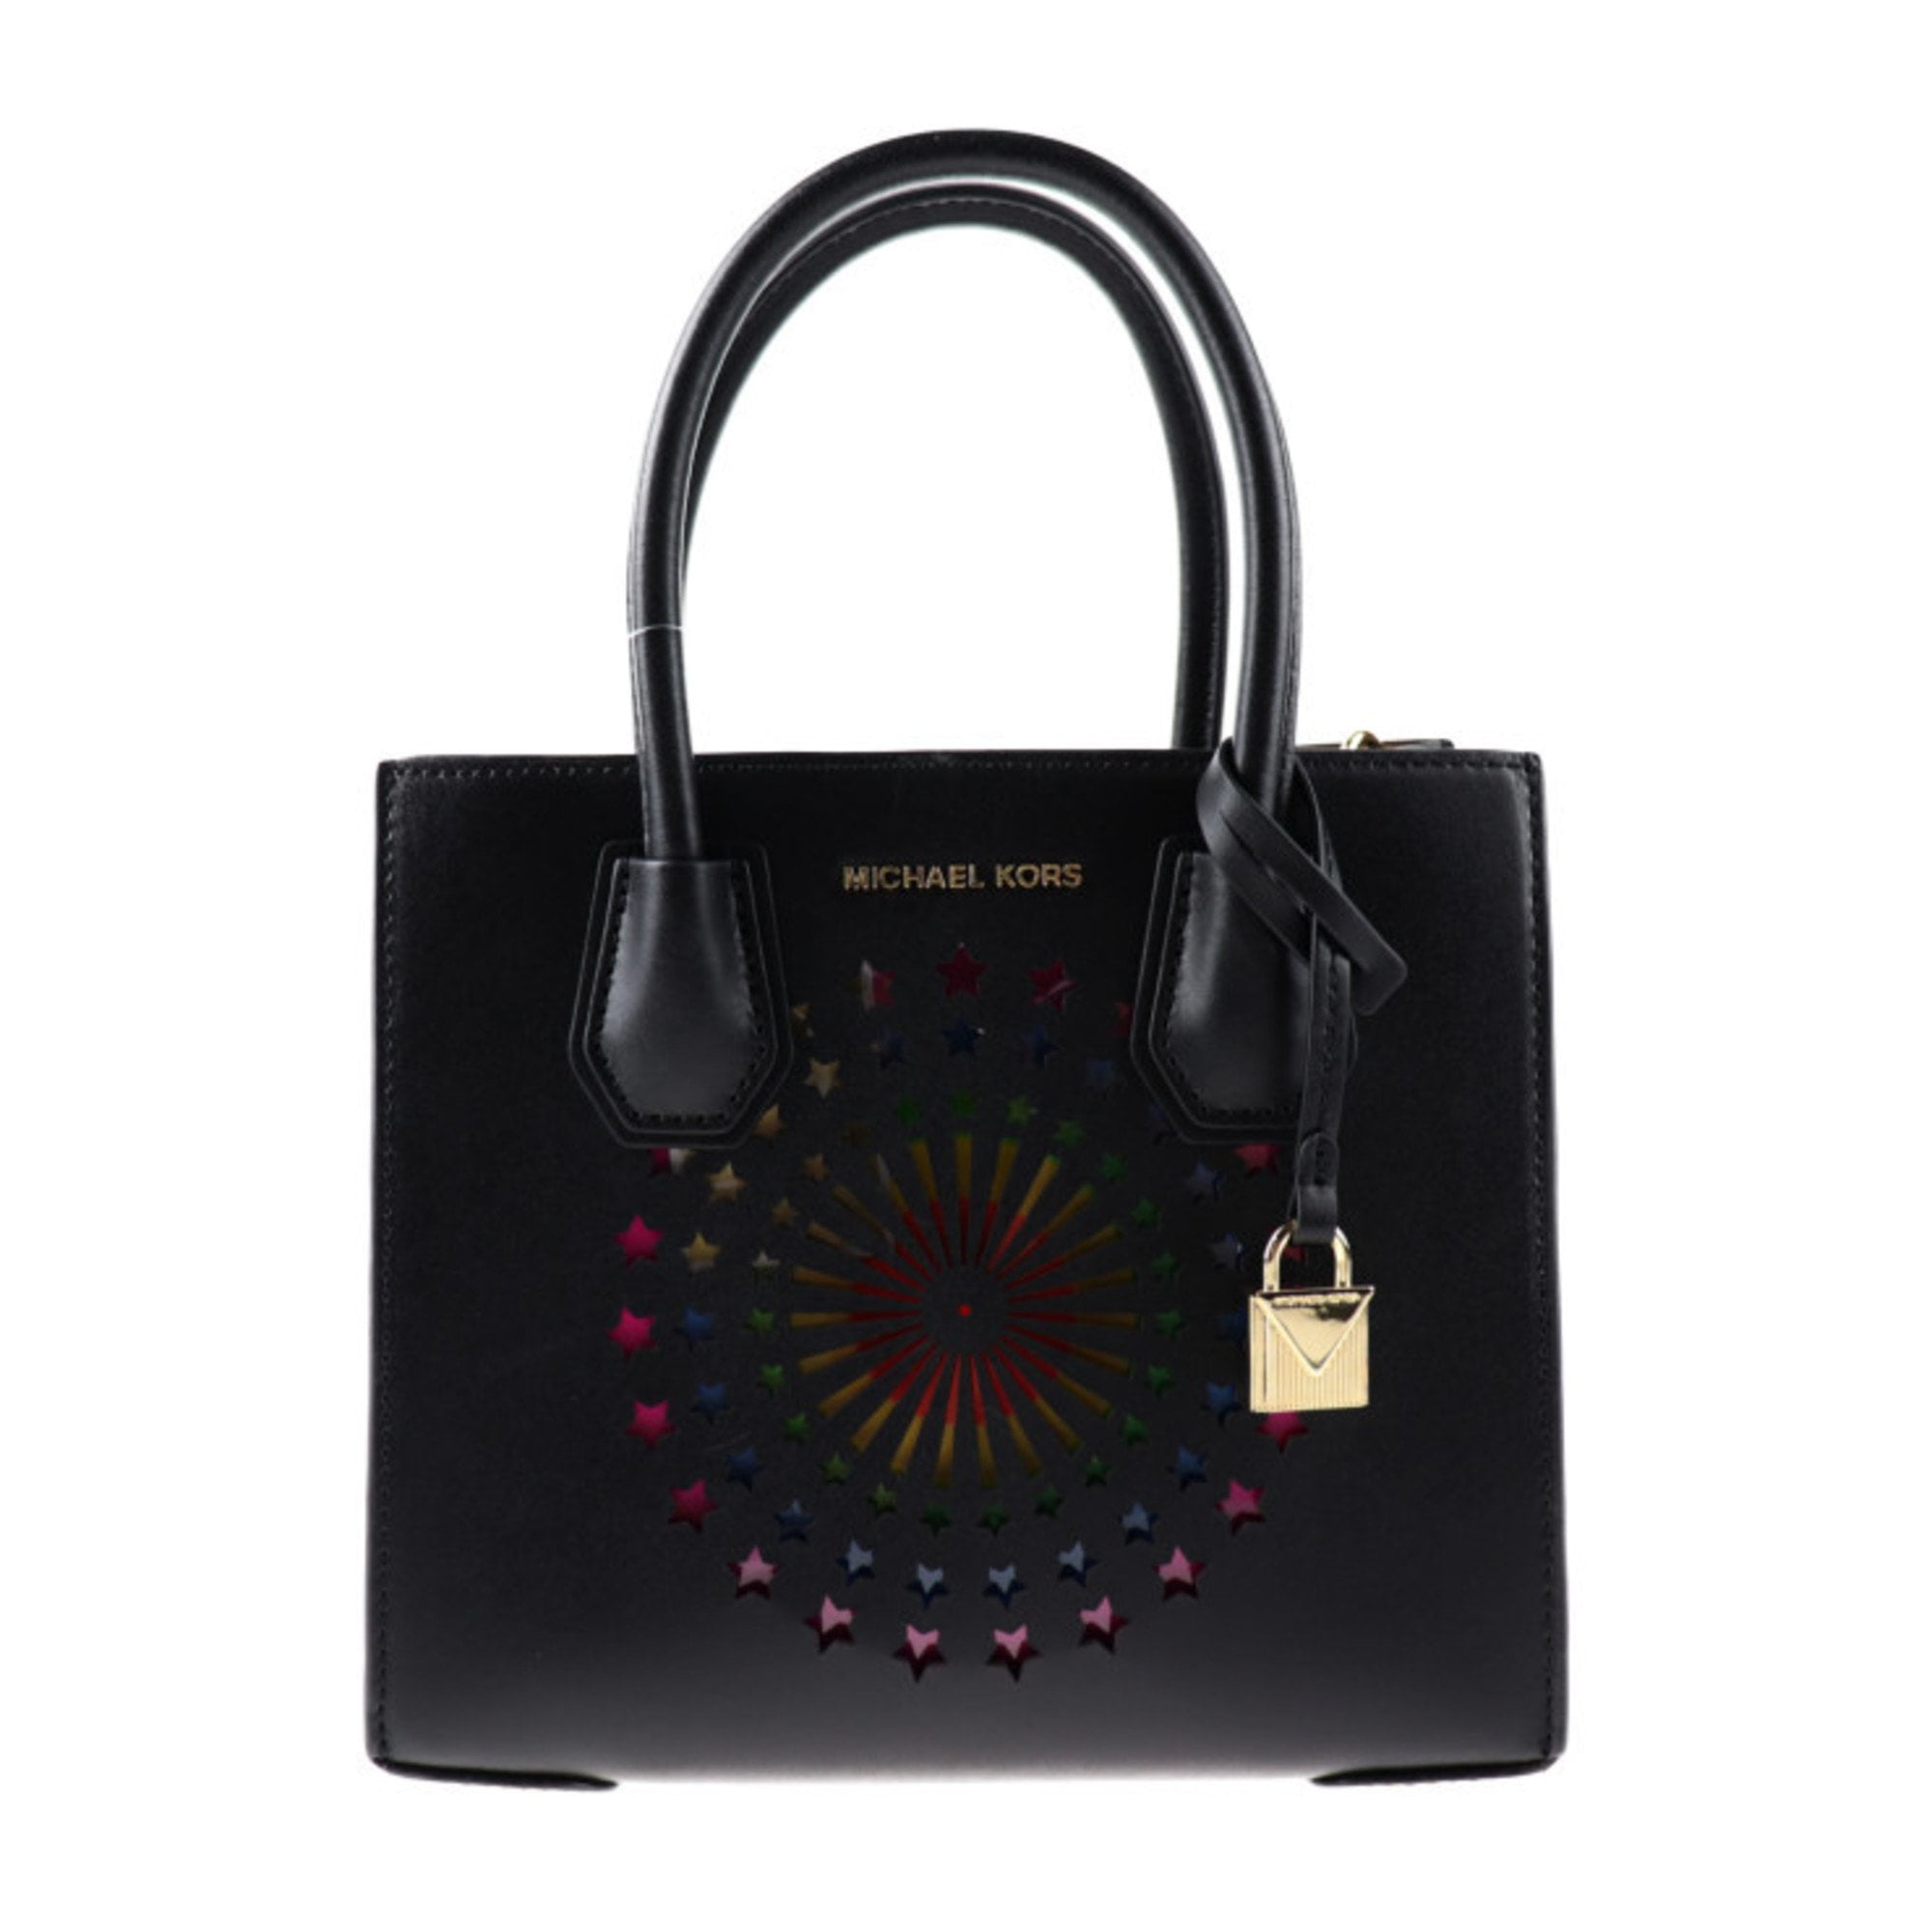 Michael Kors - Authenticated Handbag - Leather Black for Women, Never Worn